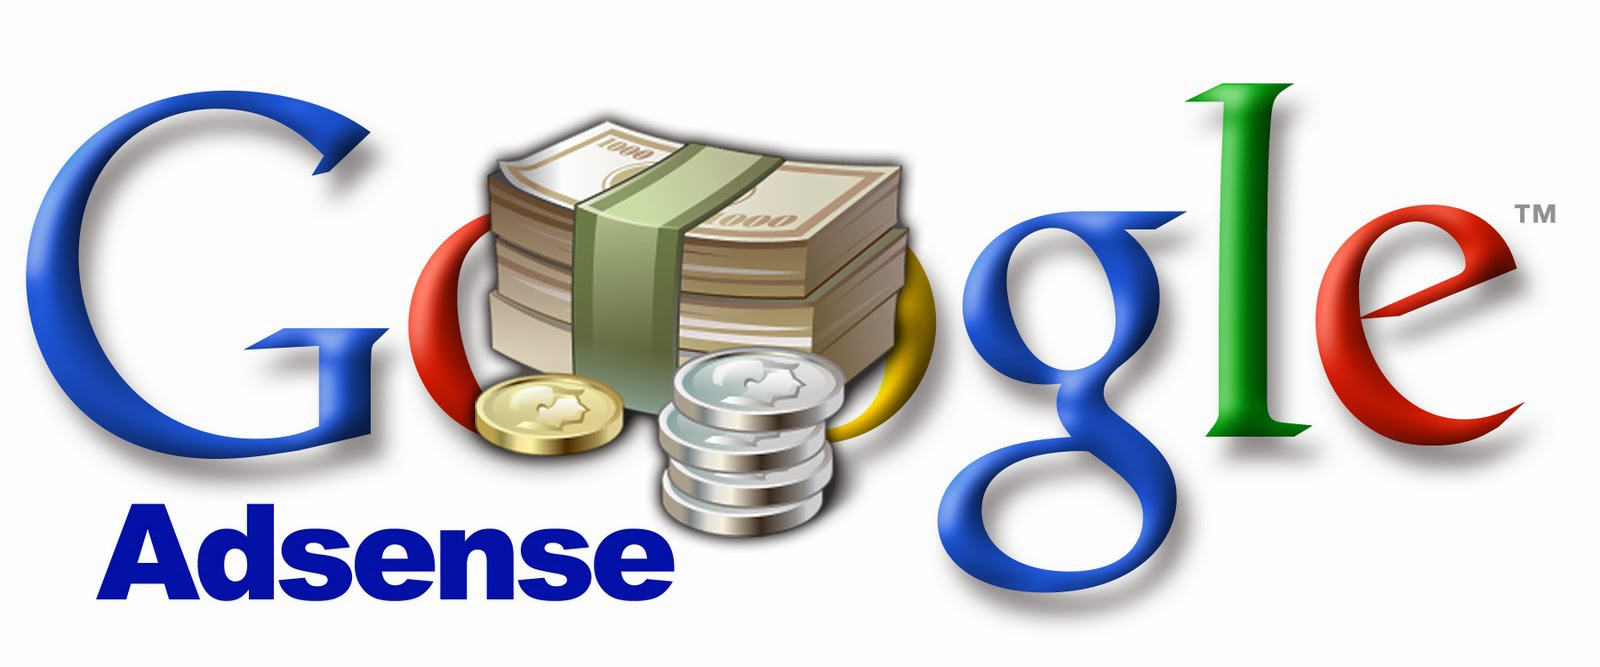 Study Adsense Google: How to reg Google Adsense successful